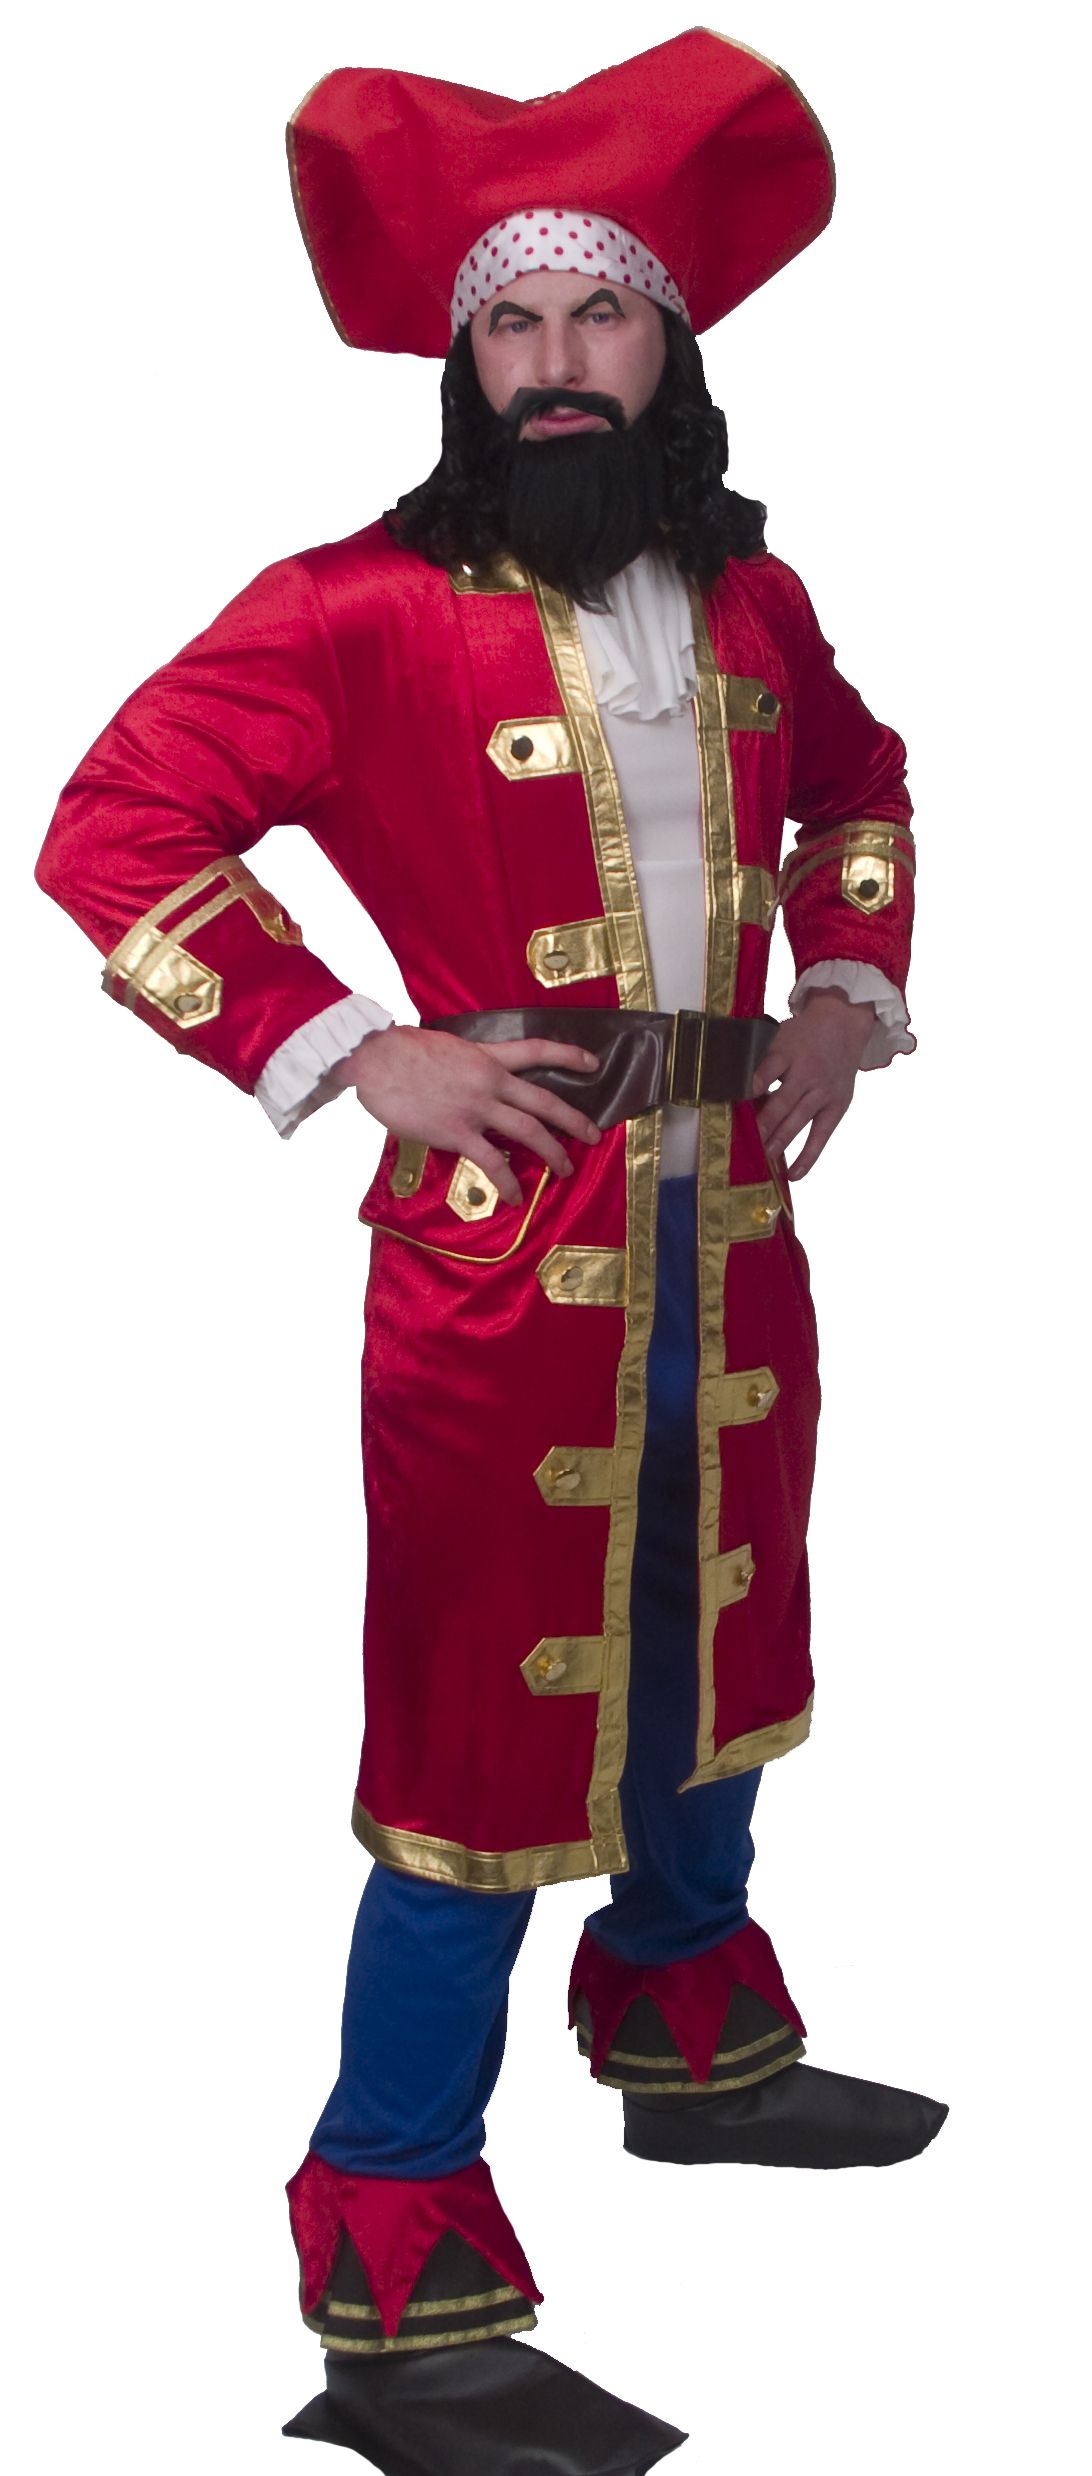 captain morgan rum runner costume adult x large